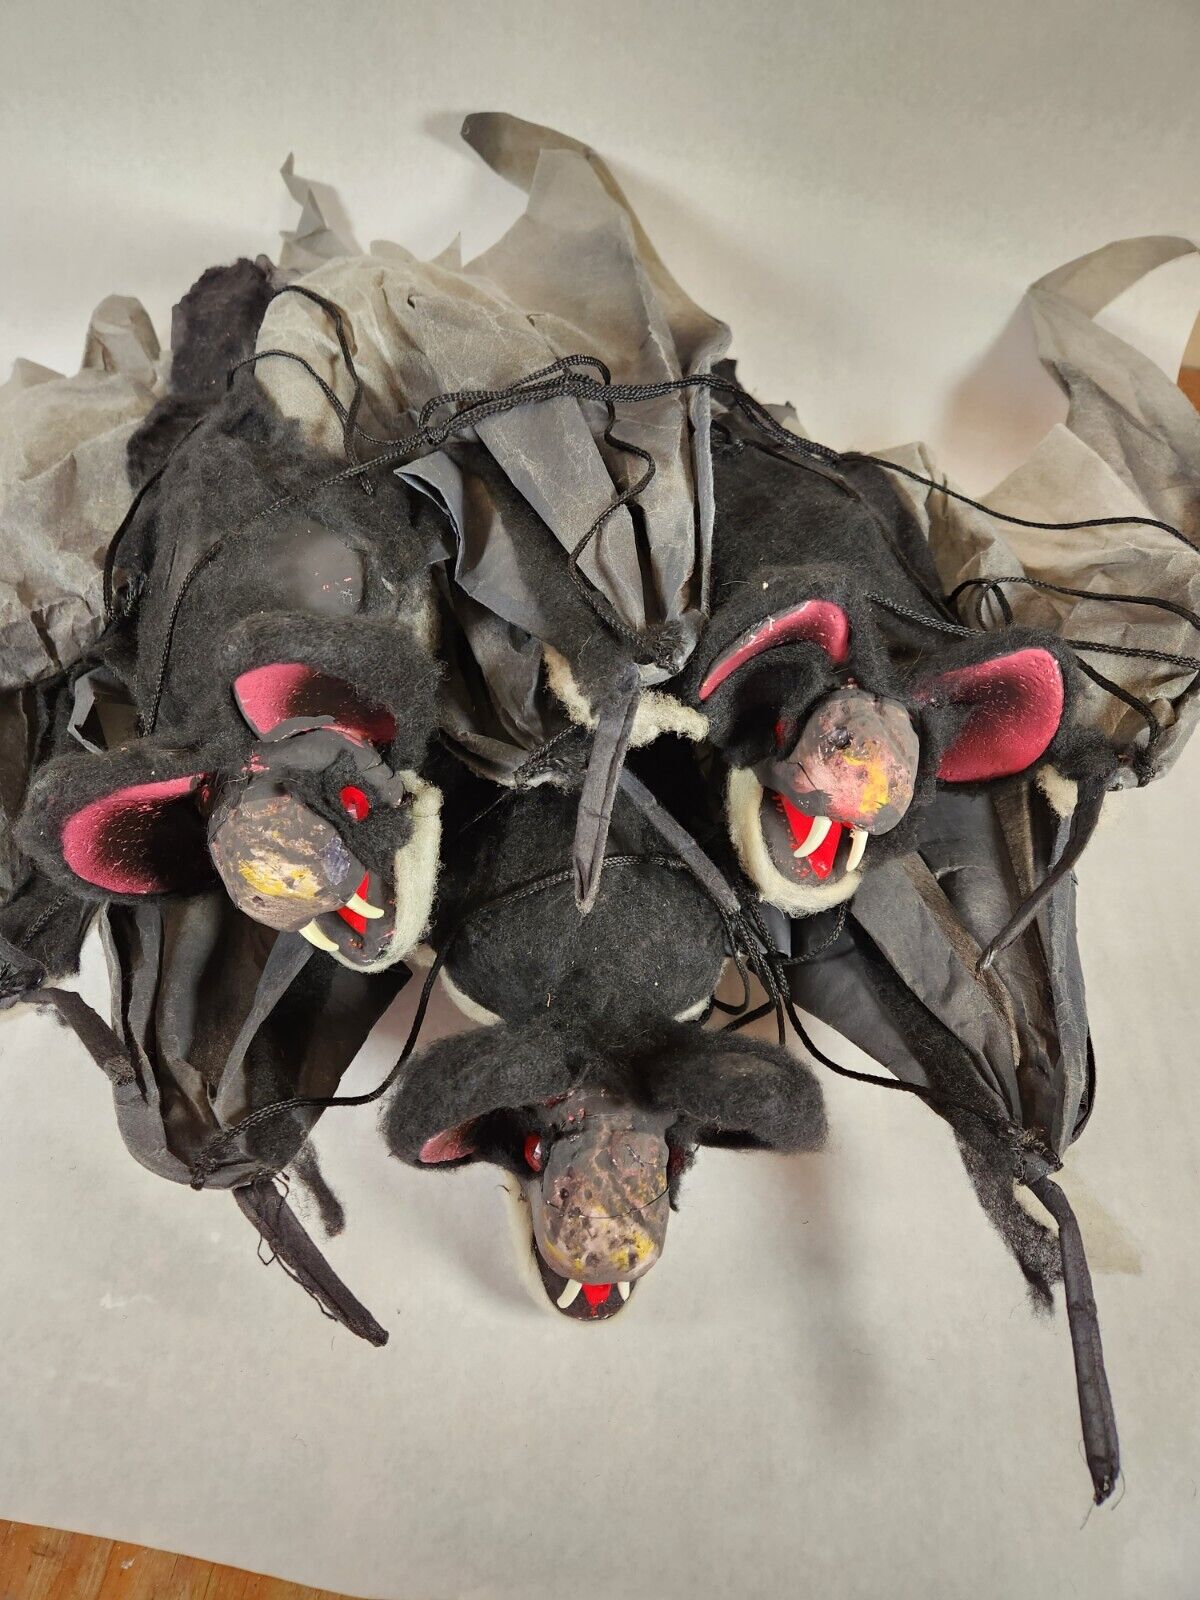 Lot of 3 Hanging Vampire Bats Large 4 plus foot Wing Span Halloween Black